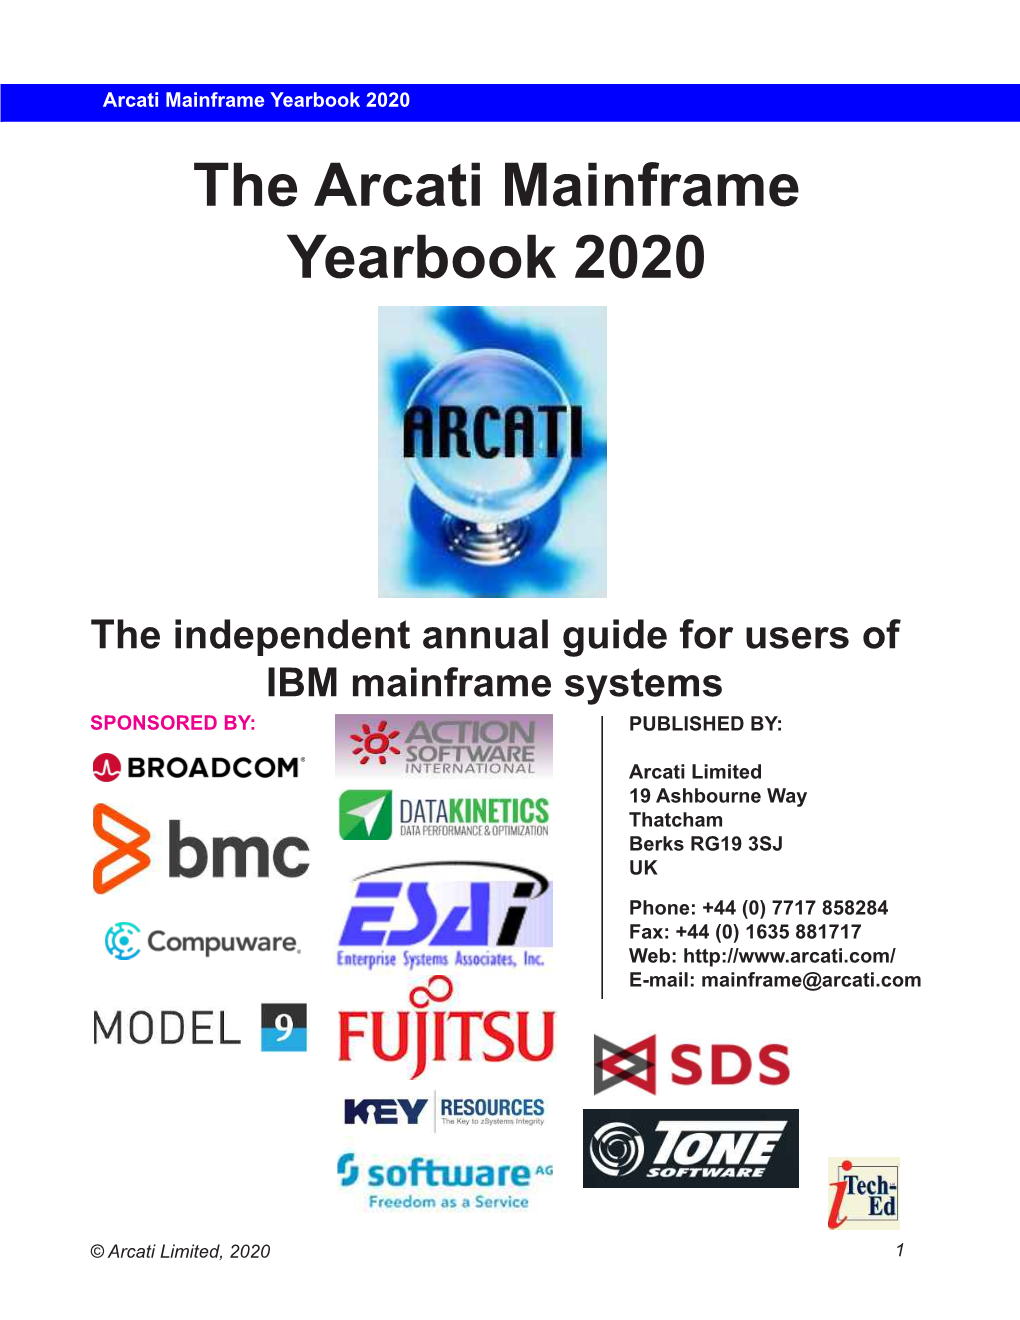 The Arcati Mainframe Yearbook 2020